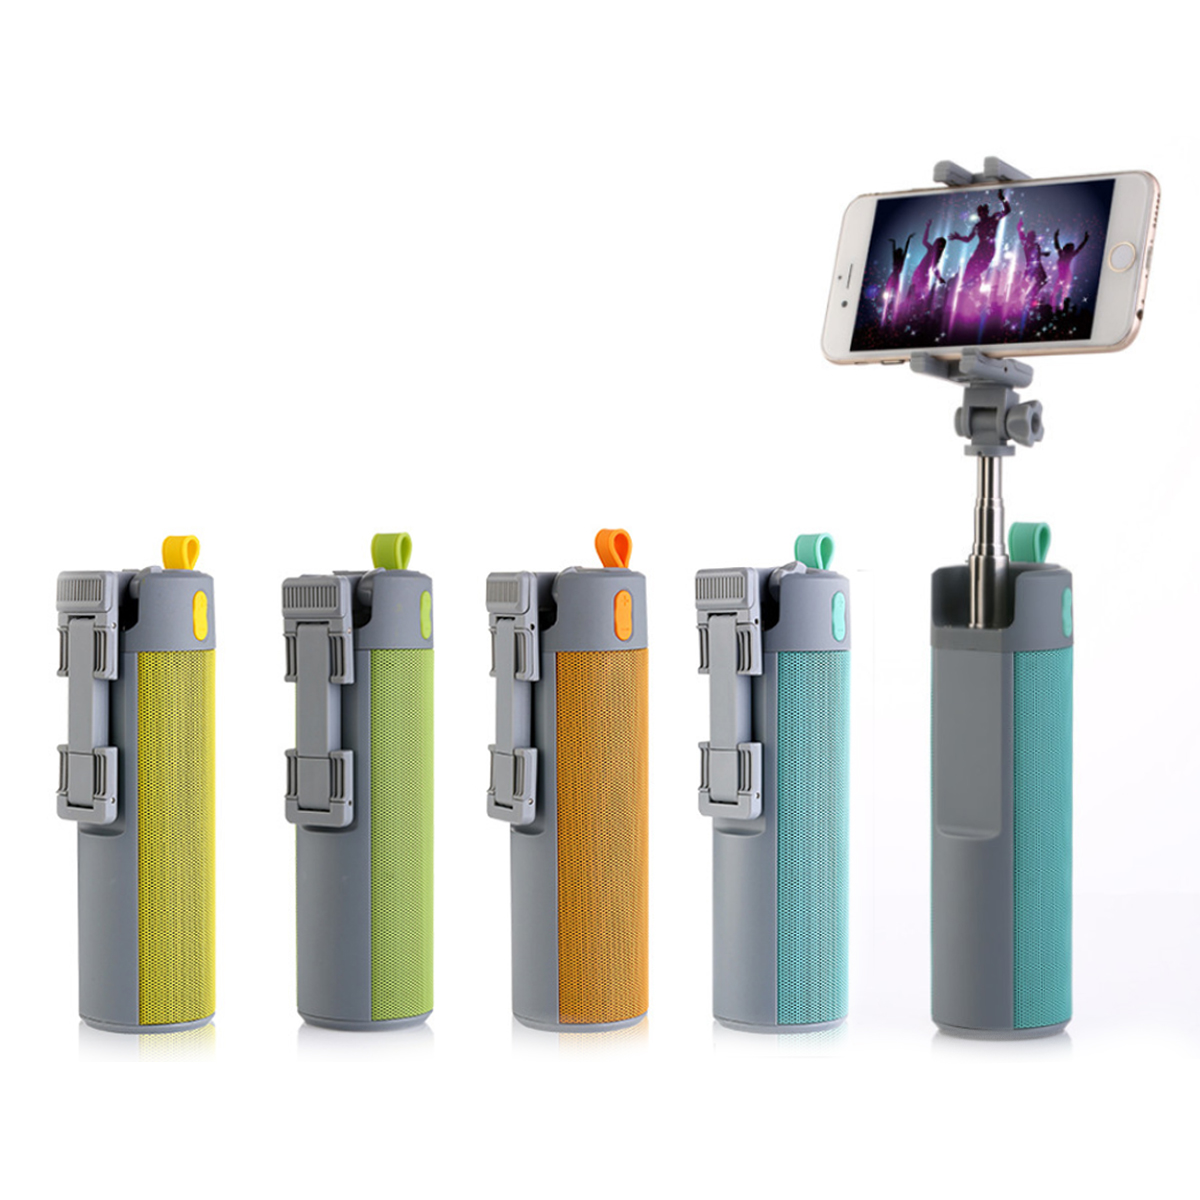 Portable Wireless Speaker with Selfie Stick